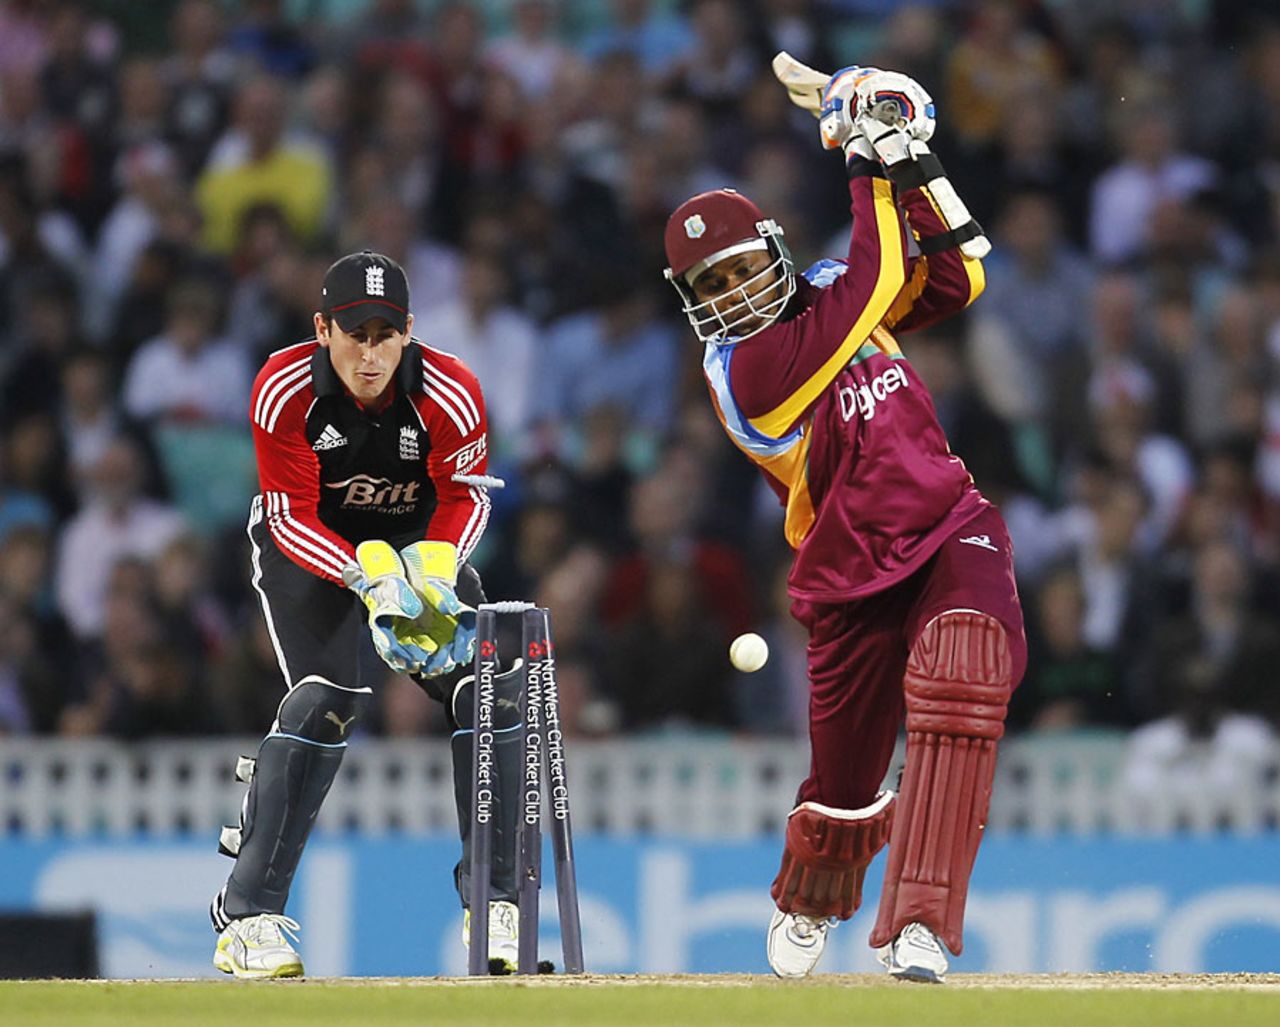 Marlon Samuels was bowled by Graeme Swann, England v West Indies, 1st Twenty20, The Oval, September 23, 2011